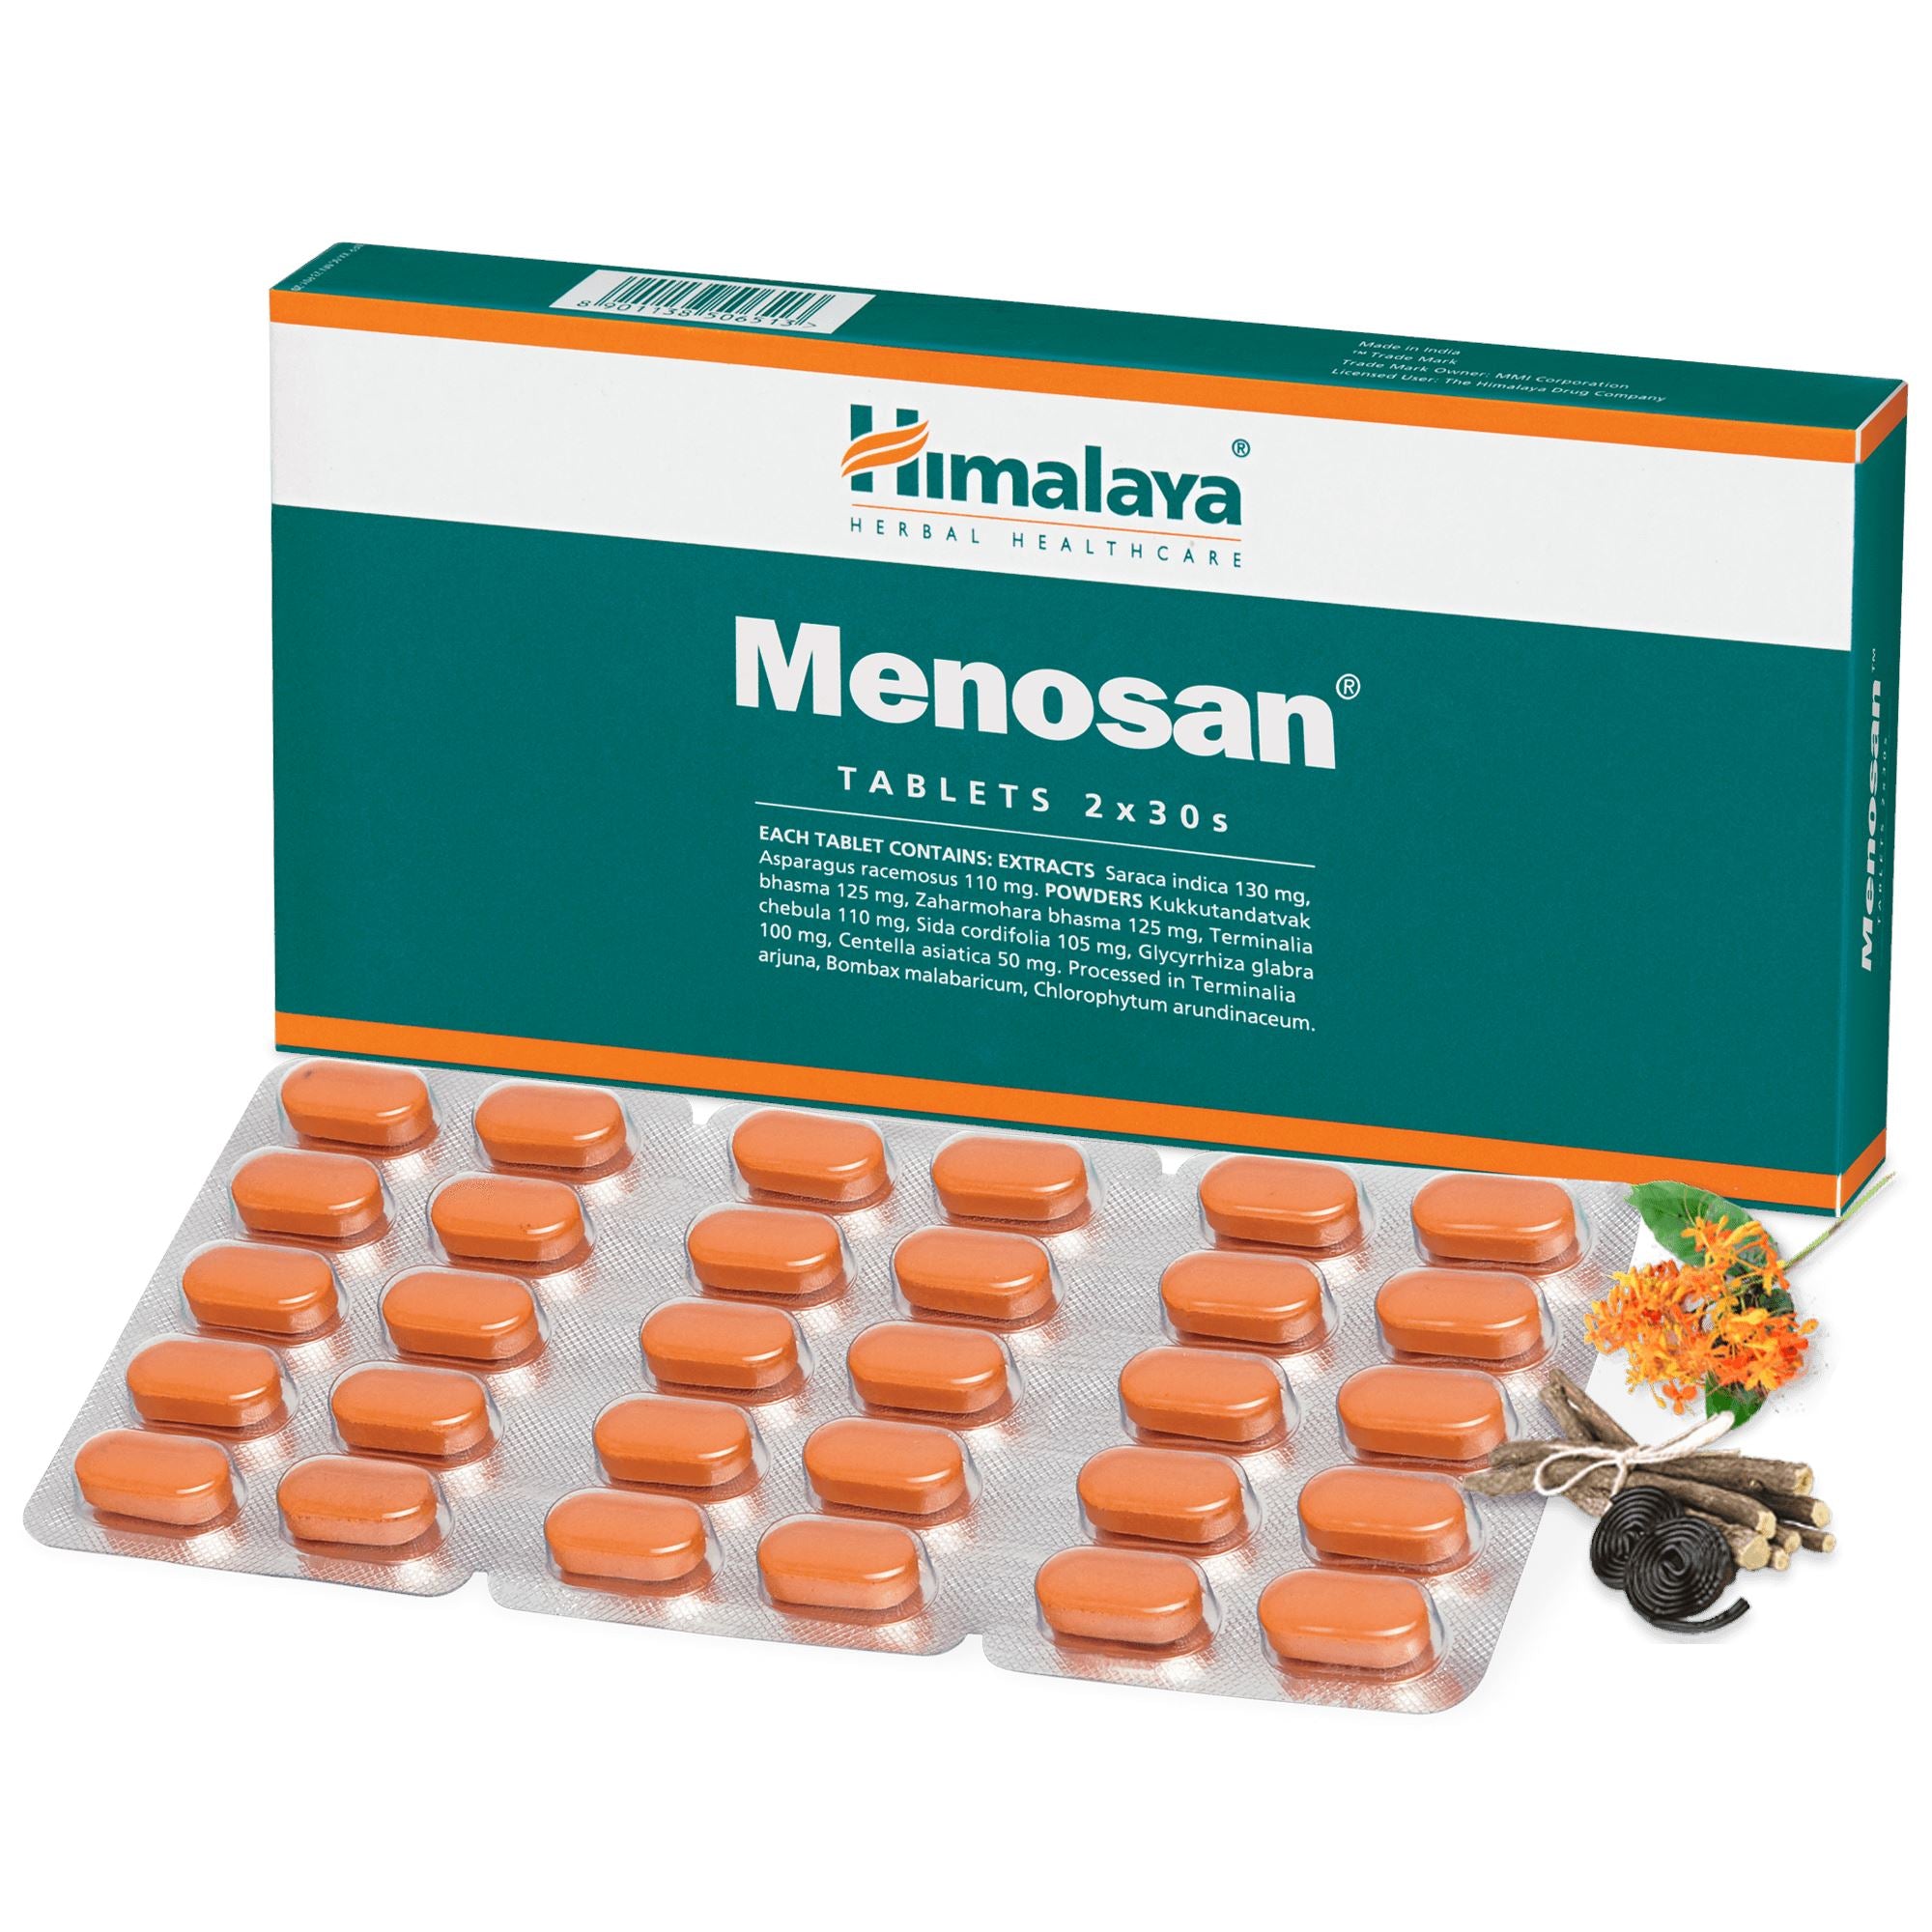 Himalaya Menosan - Useful in managing postmenopausal cardiovascular diseases